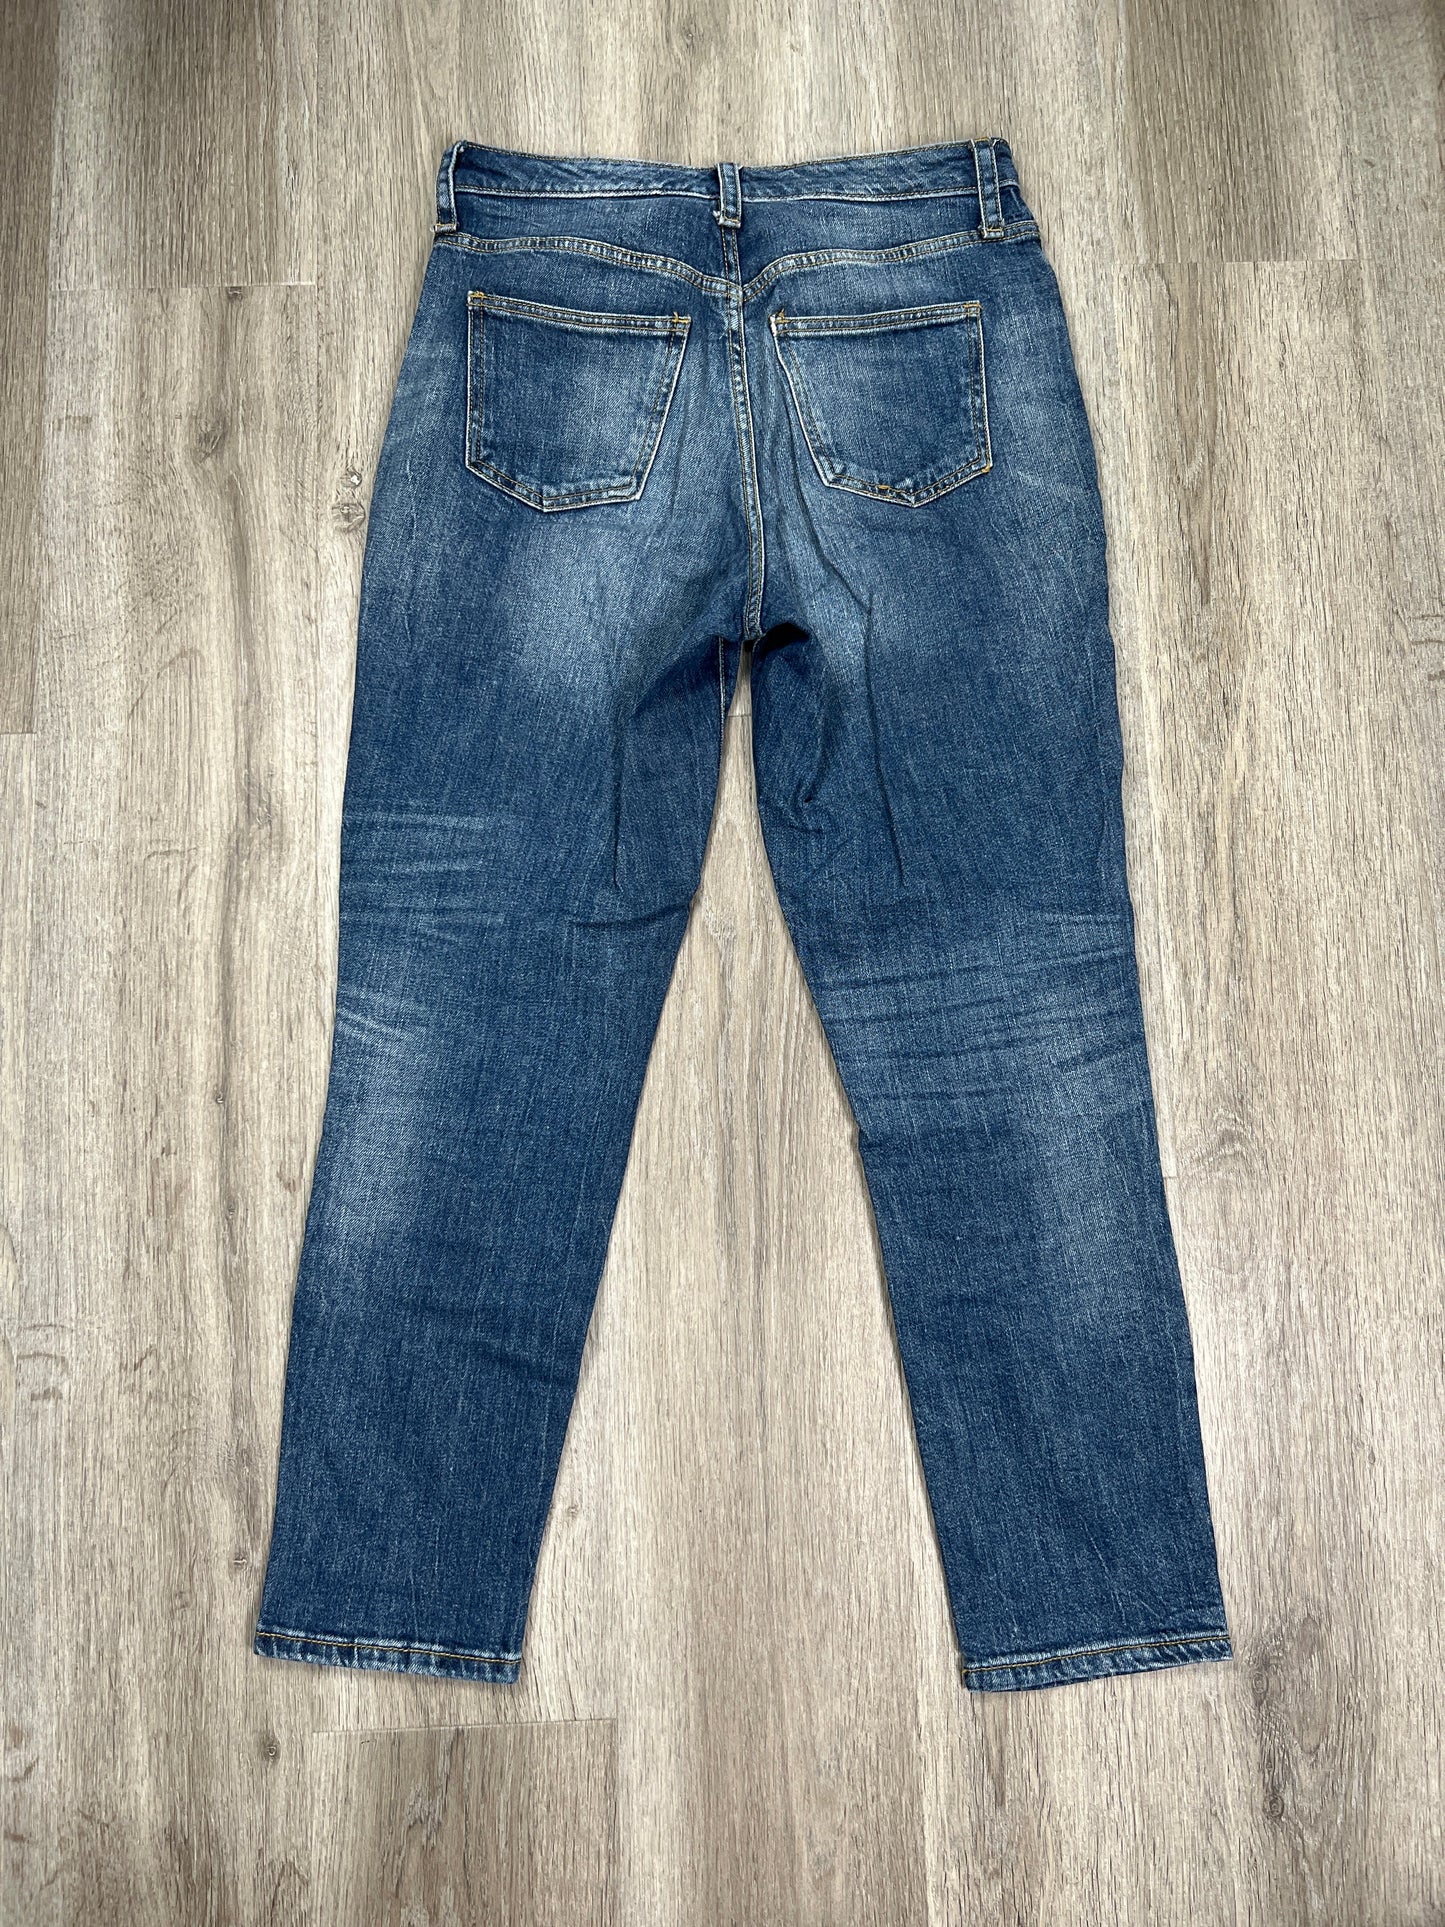 Blue Denim Jeans Straight Universal Thread, Size 6